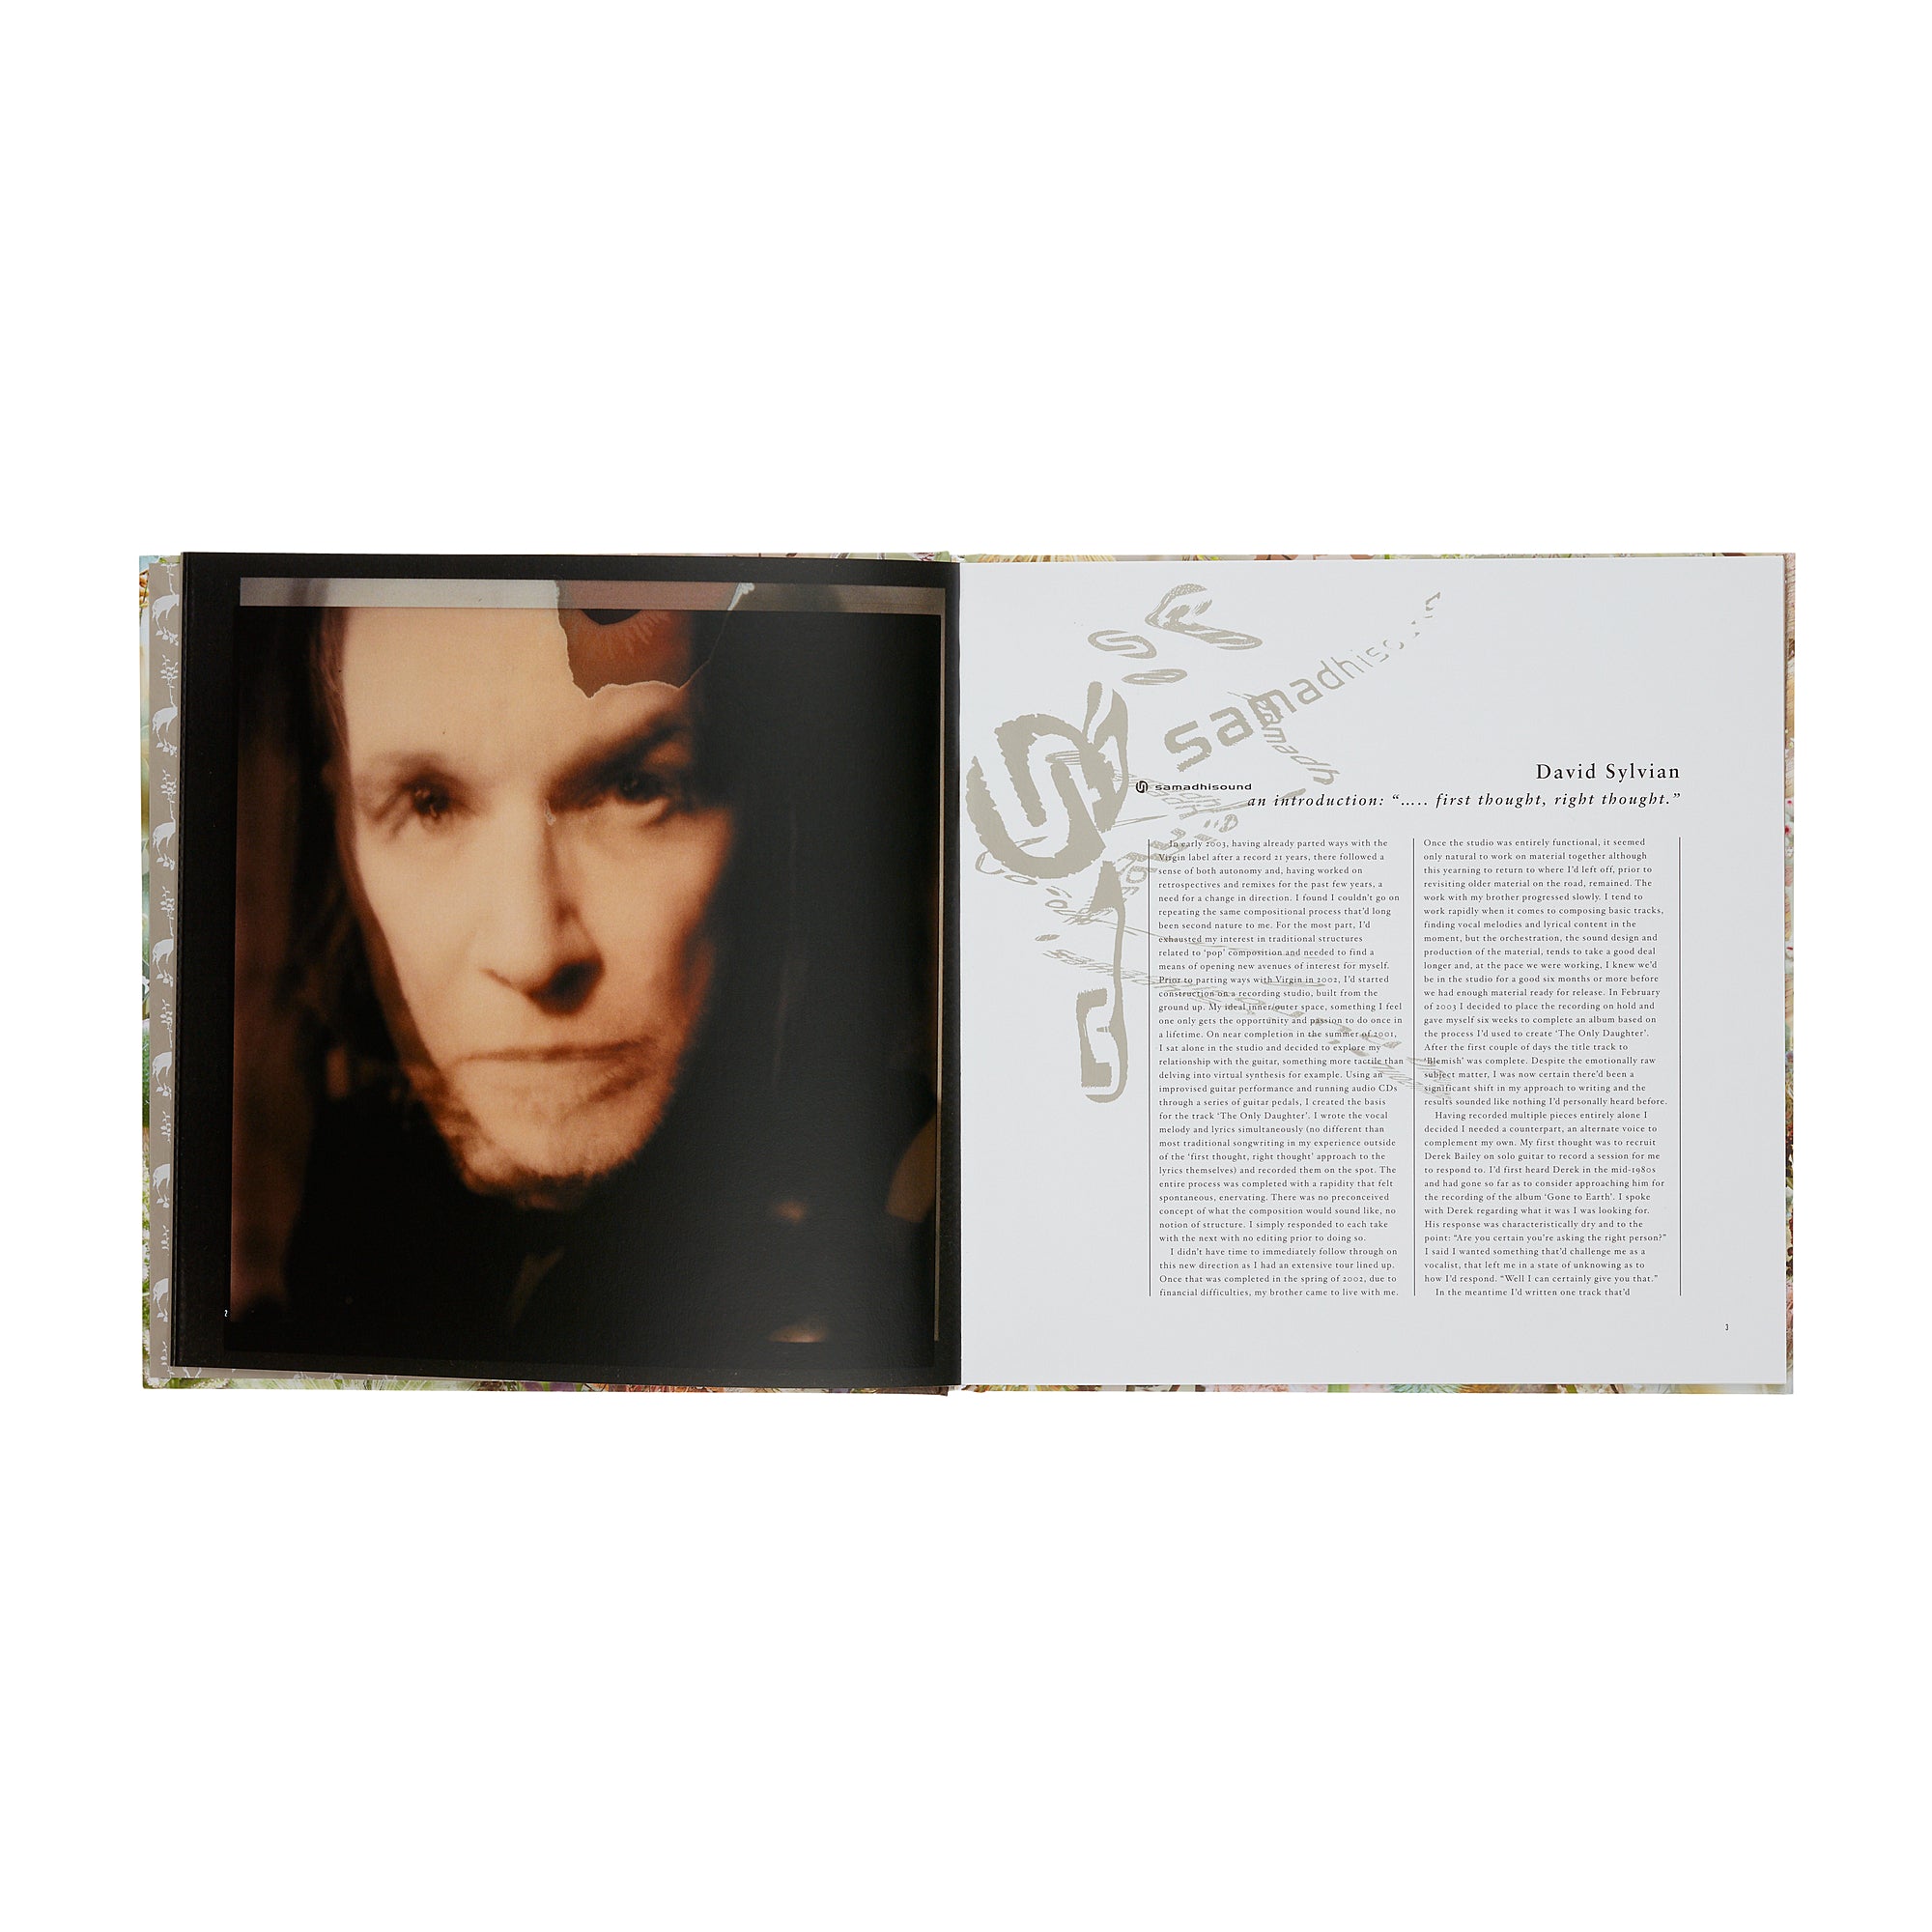 David Sylvian - Do You Know Me Now? (Exclusive 10CD Box Set) - David Sylvian